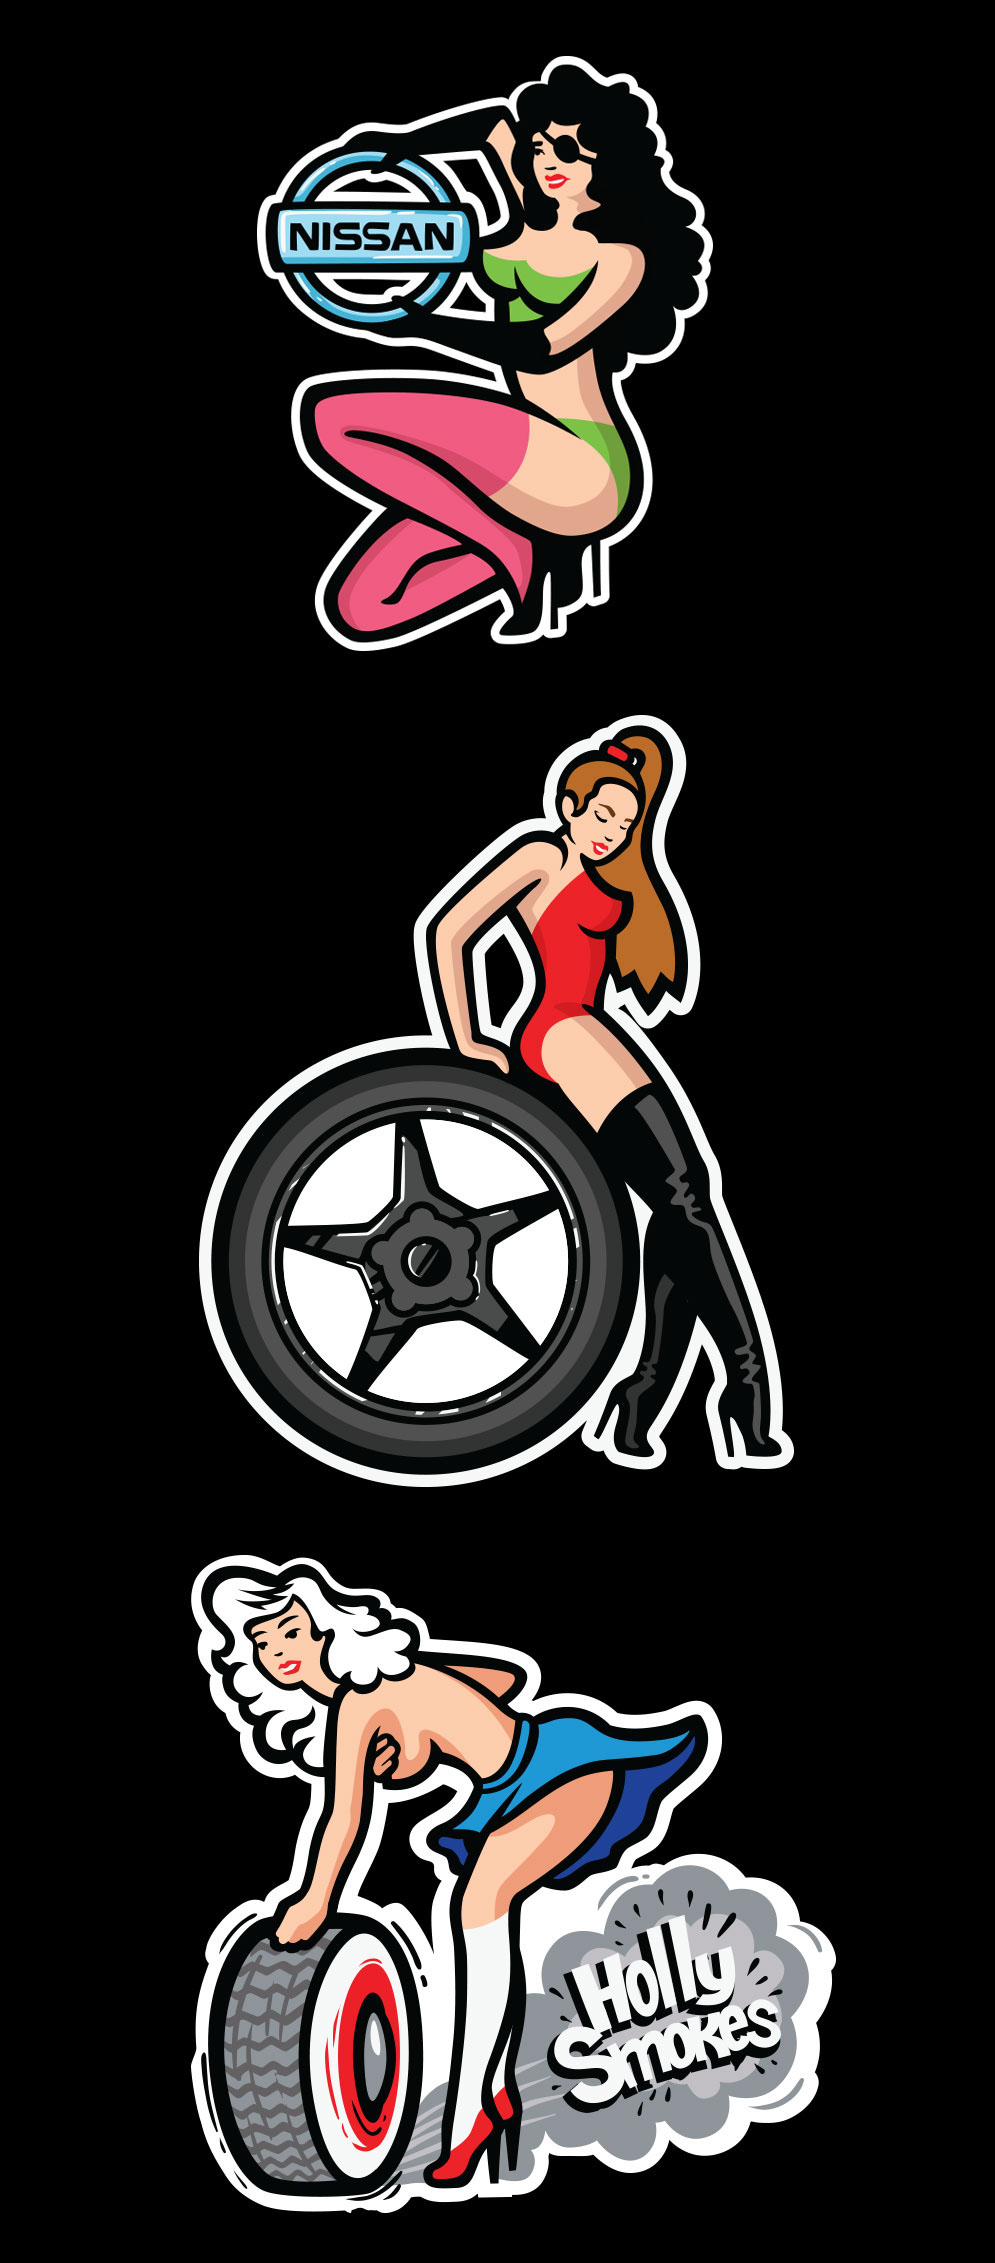 Konstantin Shalev Константин Шалев kvadart kvadrat car vinyl drift pattern illustrations stickers logos Russia Nissan madethis girl